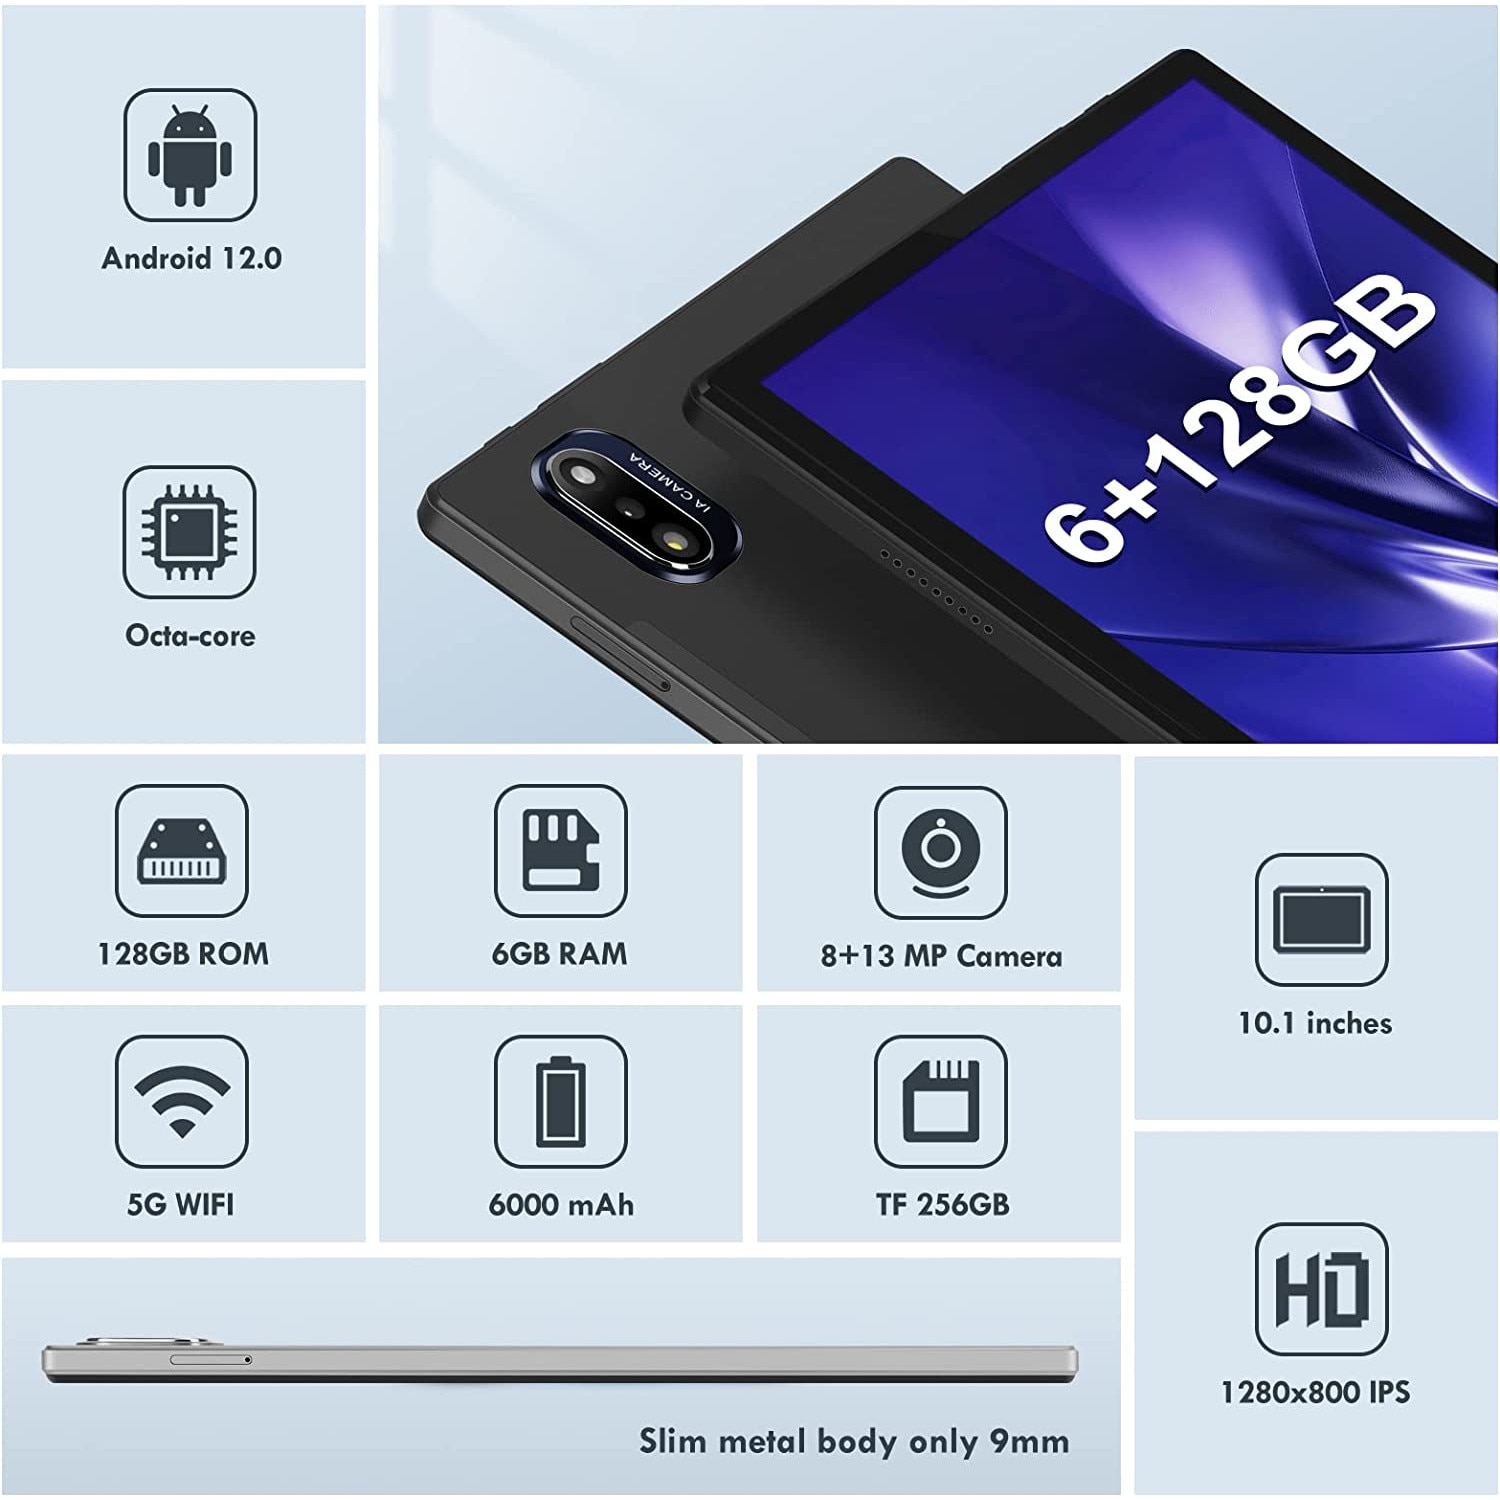 SIMPLORI Android Tablet 10 inch, Octa-Core Processor, 6GB RAM+128GB ROM